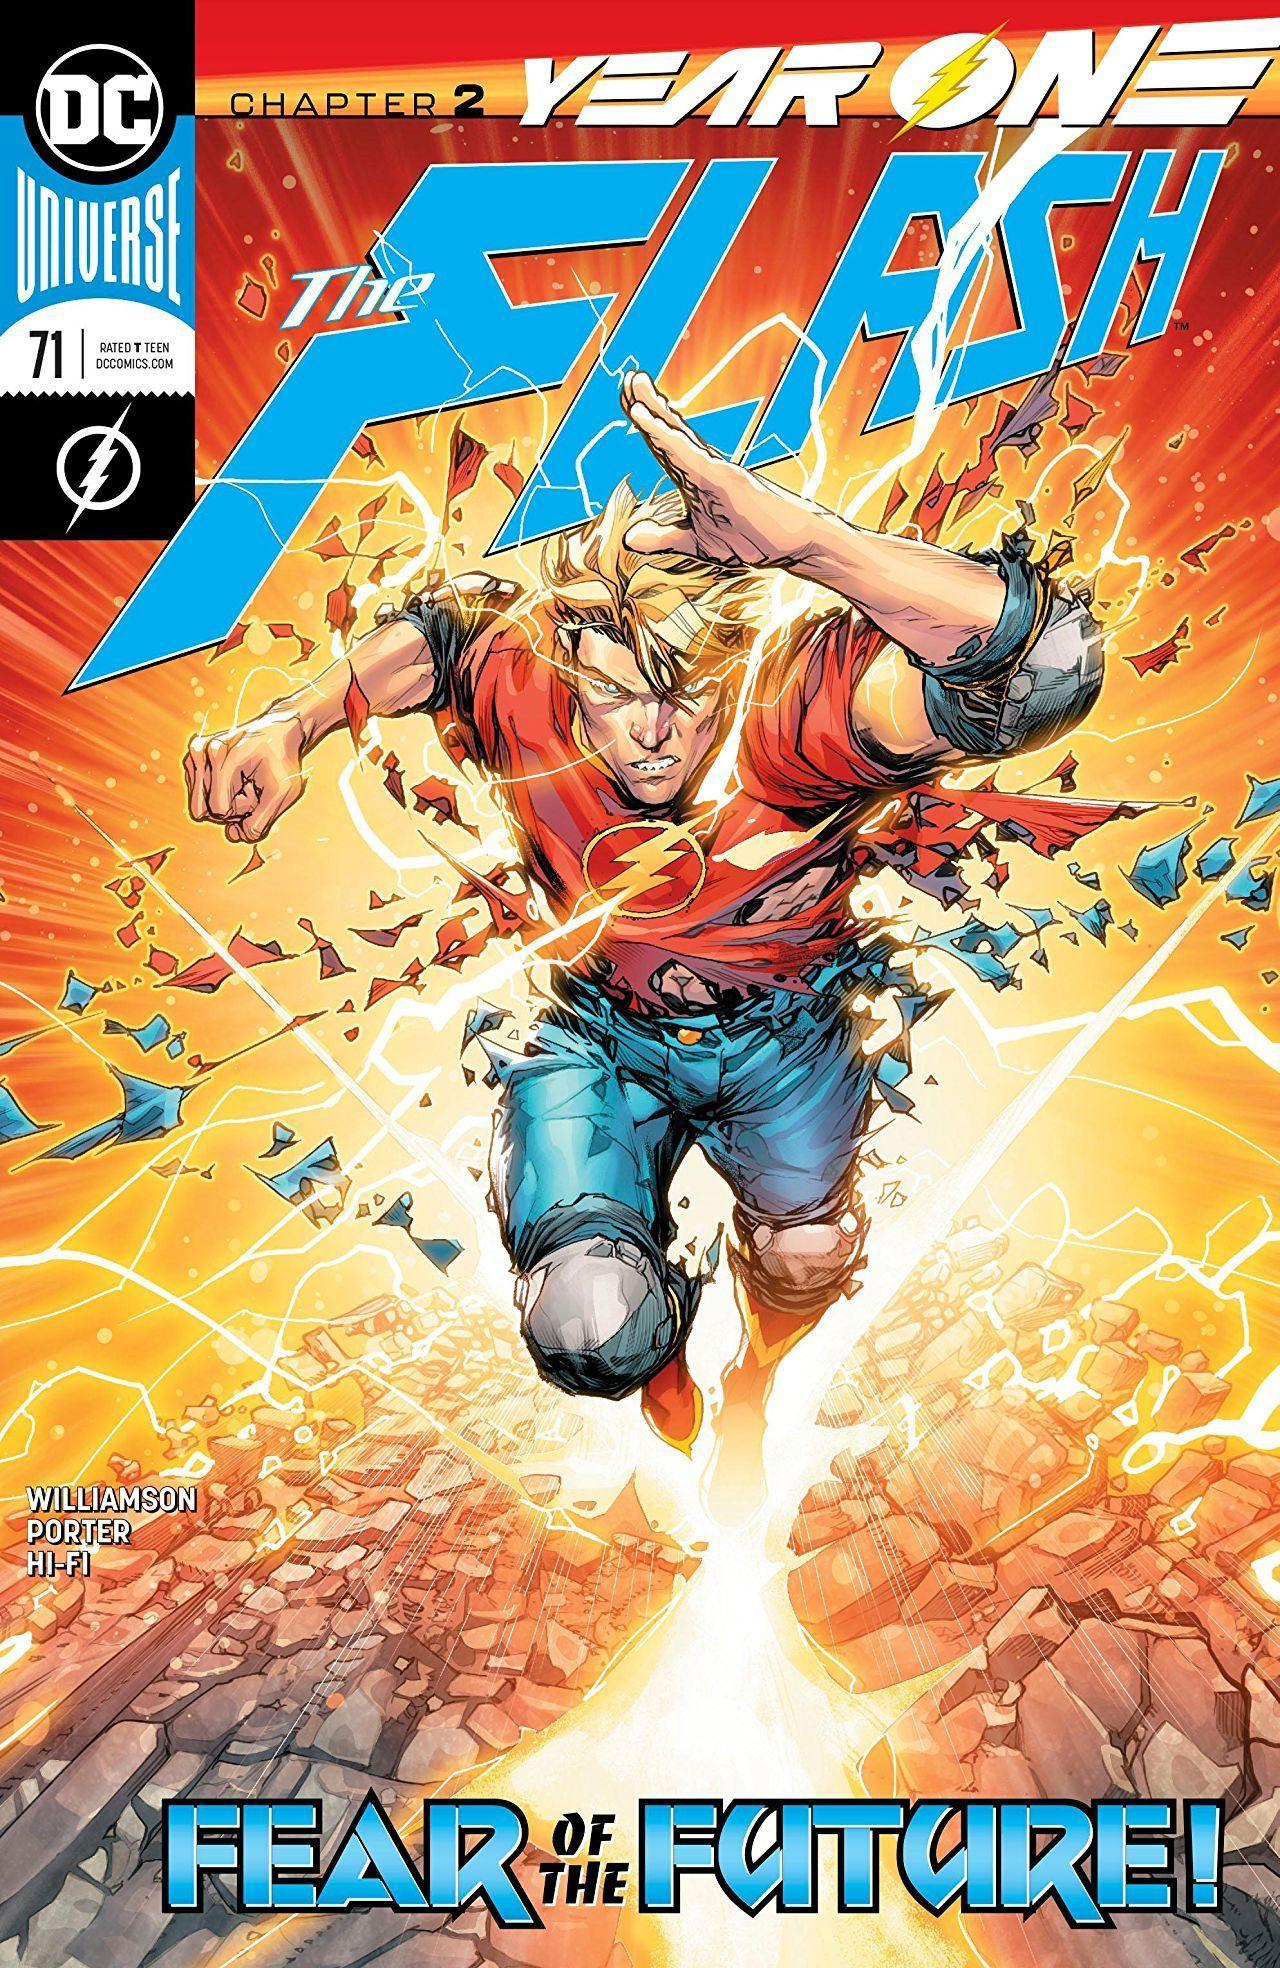 The Flash Vol. 5 #71